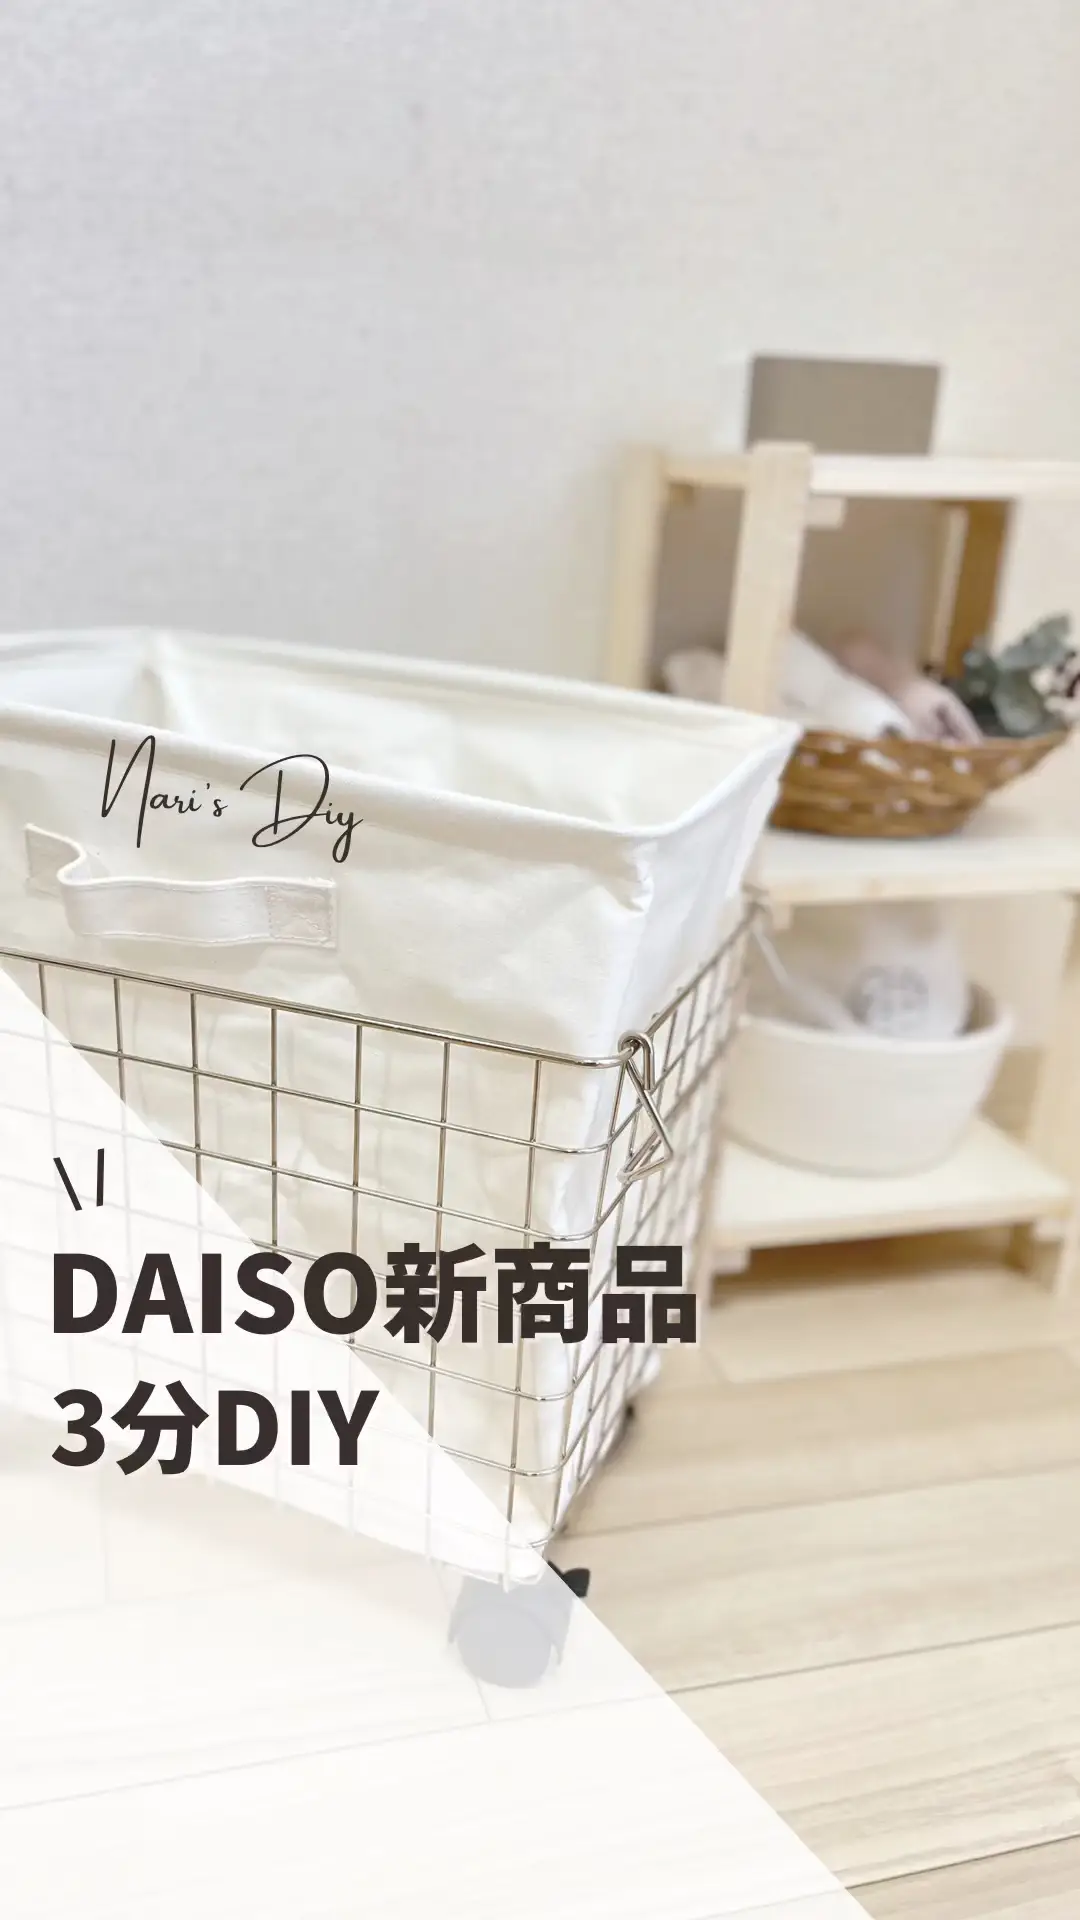 【DAISO】ダイソーの新商品で簡単3分DIY♡ランドリーバスケット作ってみた【100均DIY】の画像 (1枚目)